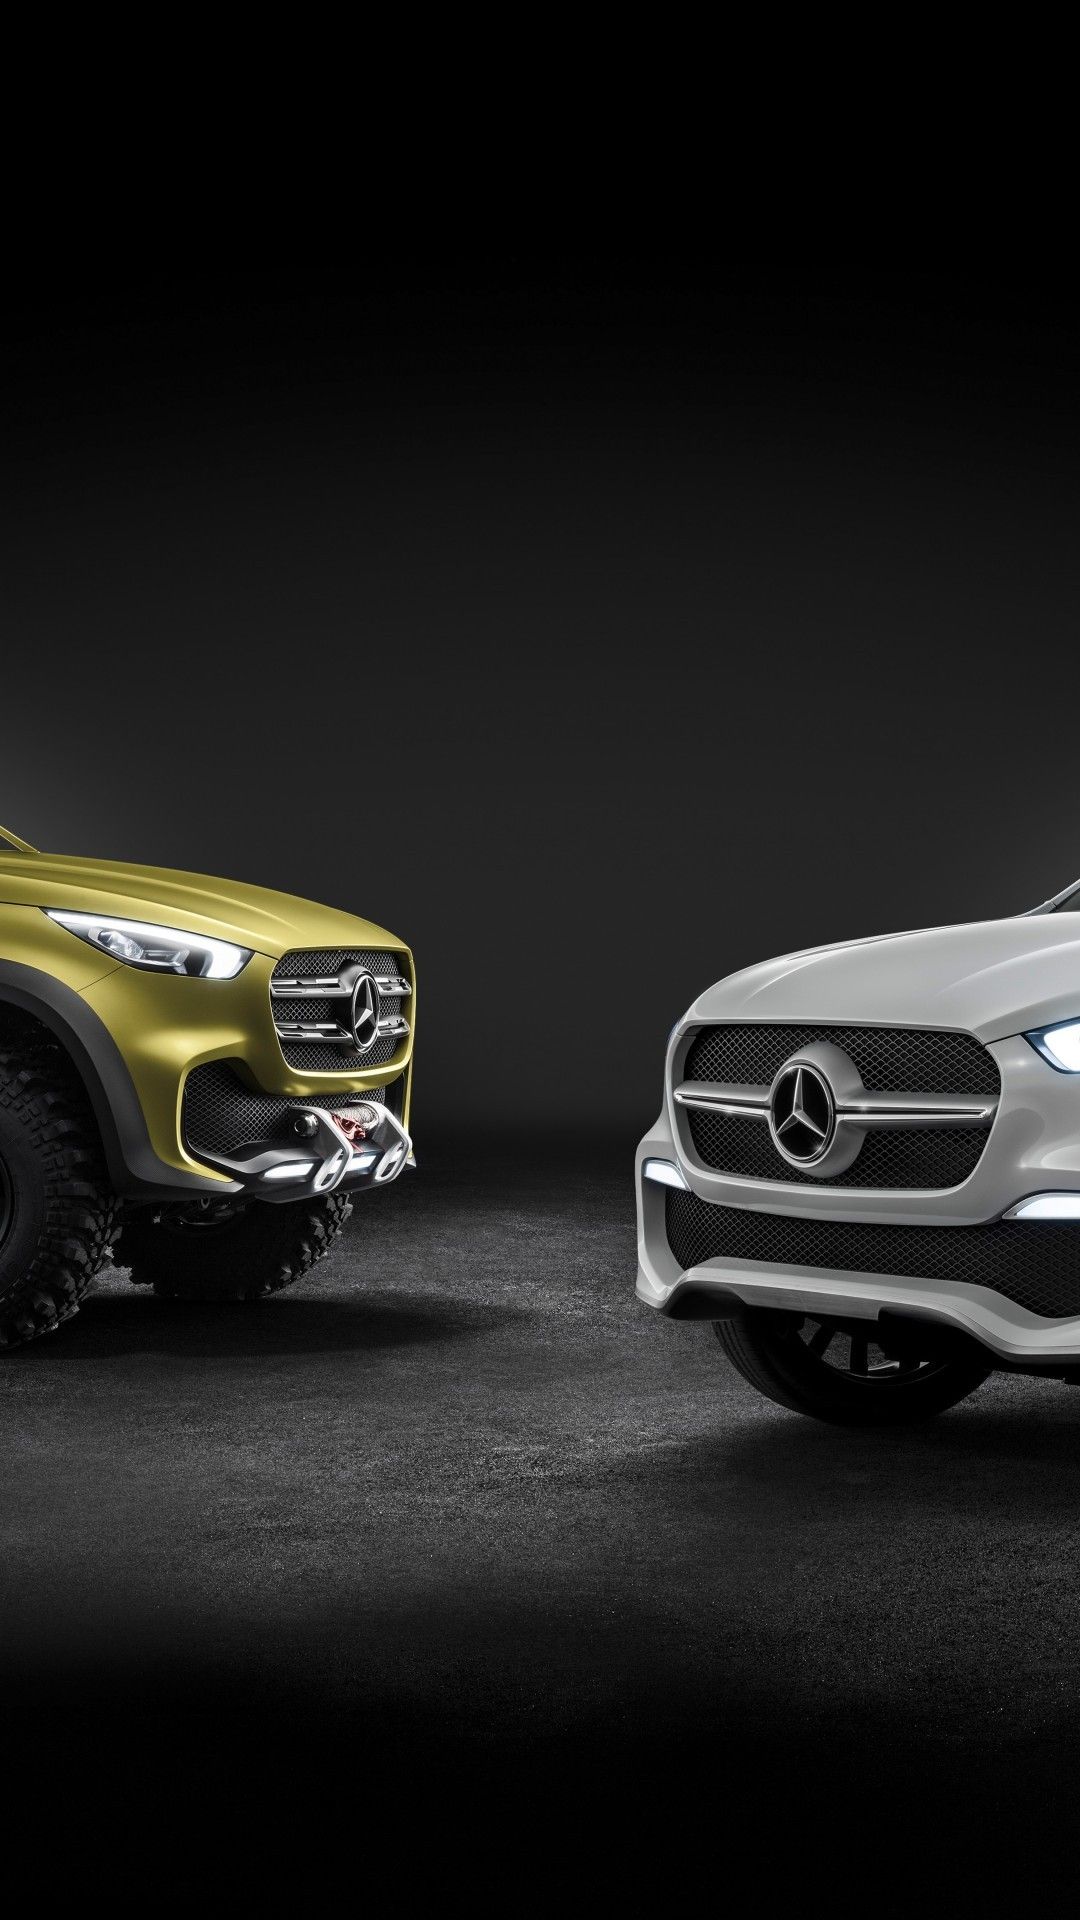 Mercedes Benz X Class, Concept, Pickup, Cars, Yellow